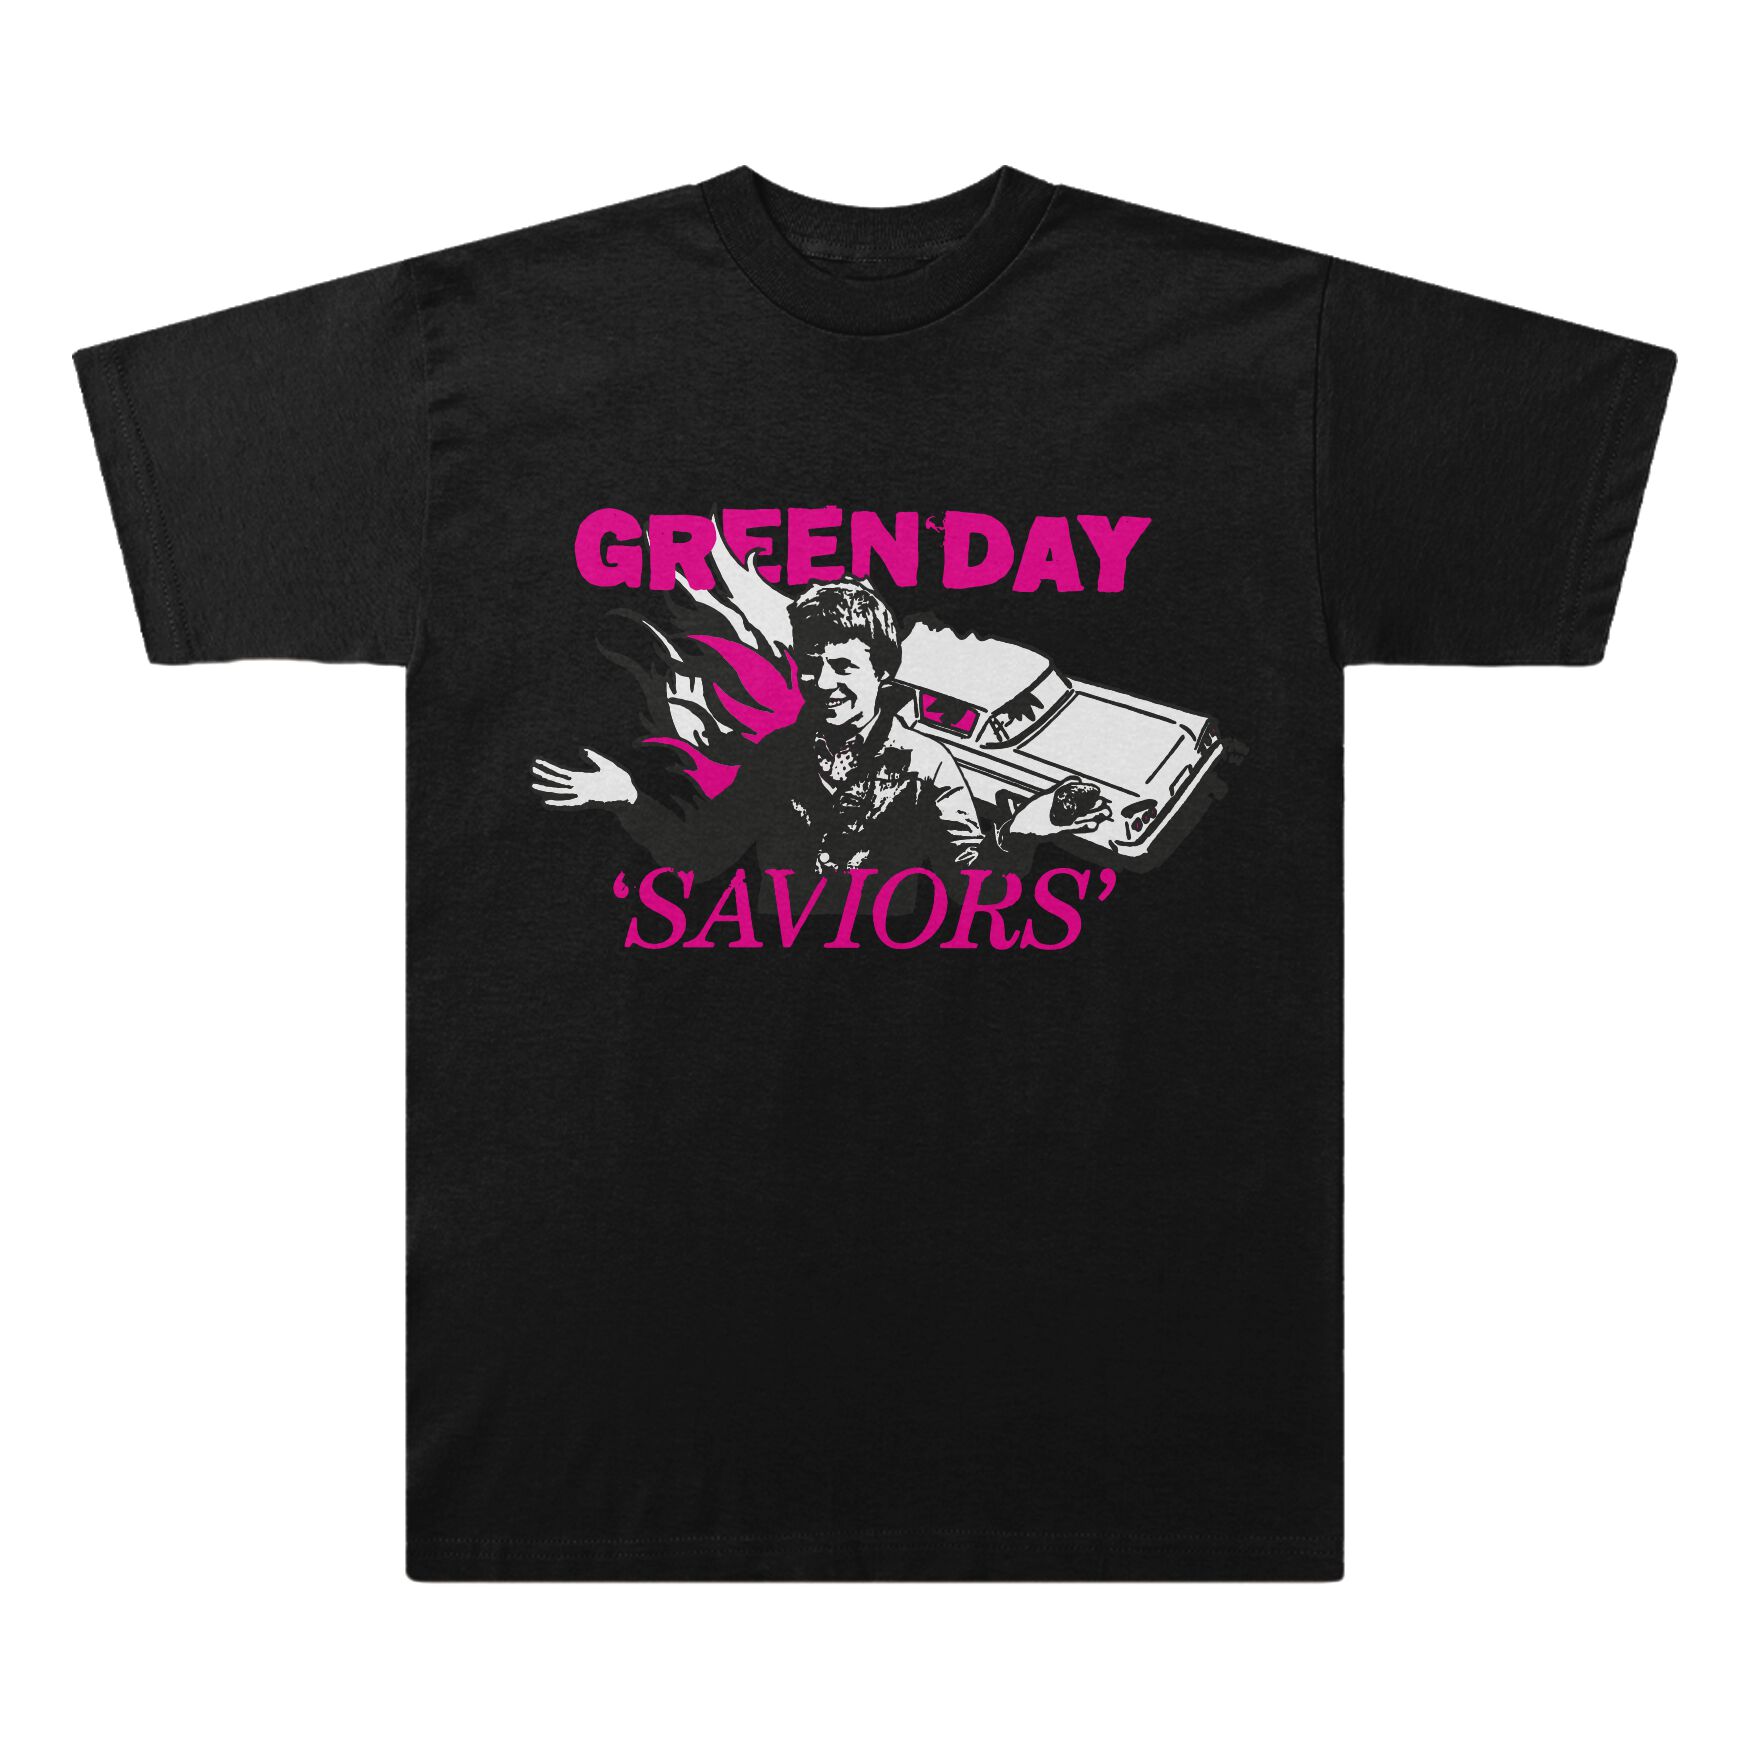 Green Day Saviors Illustration T-Shirt schwarz in XXL